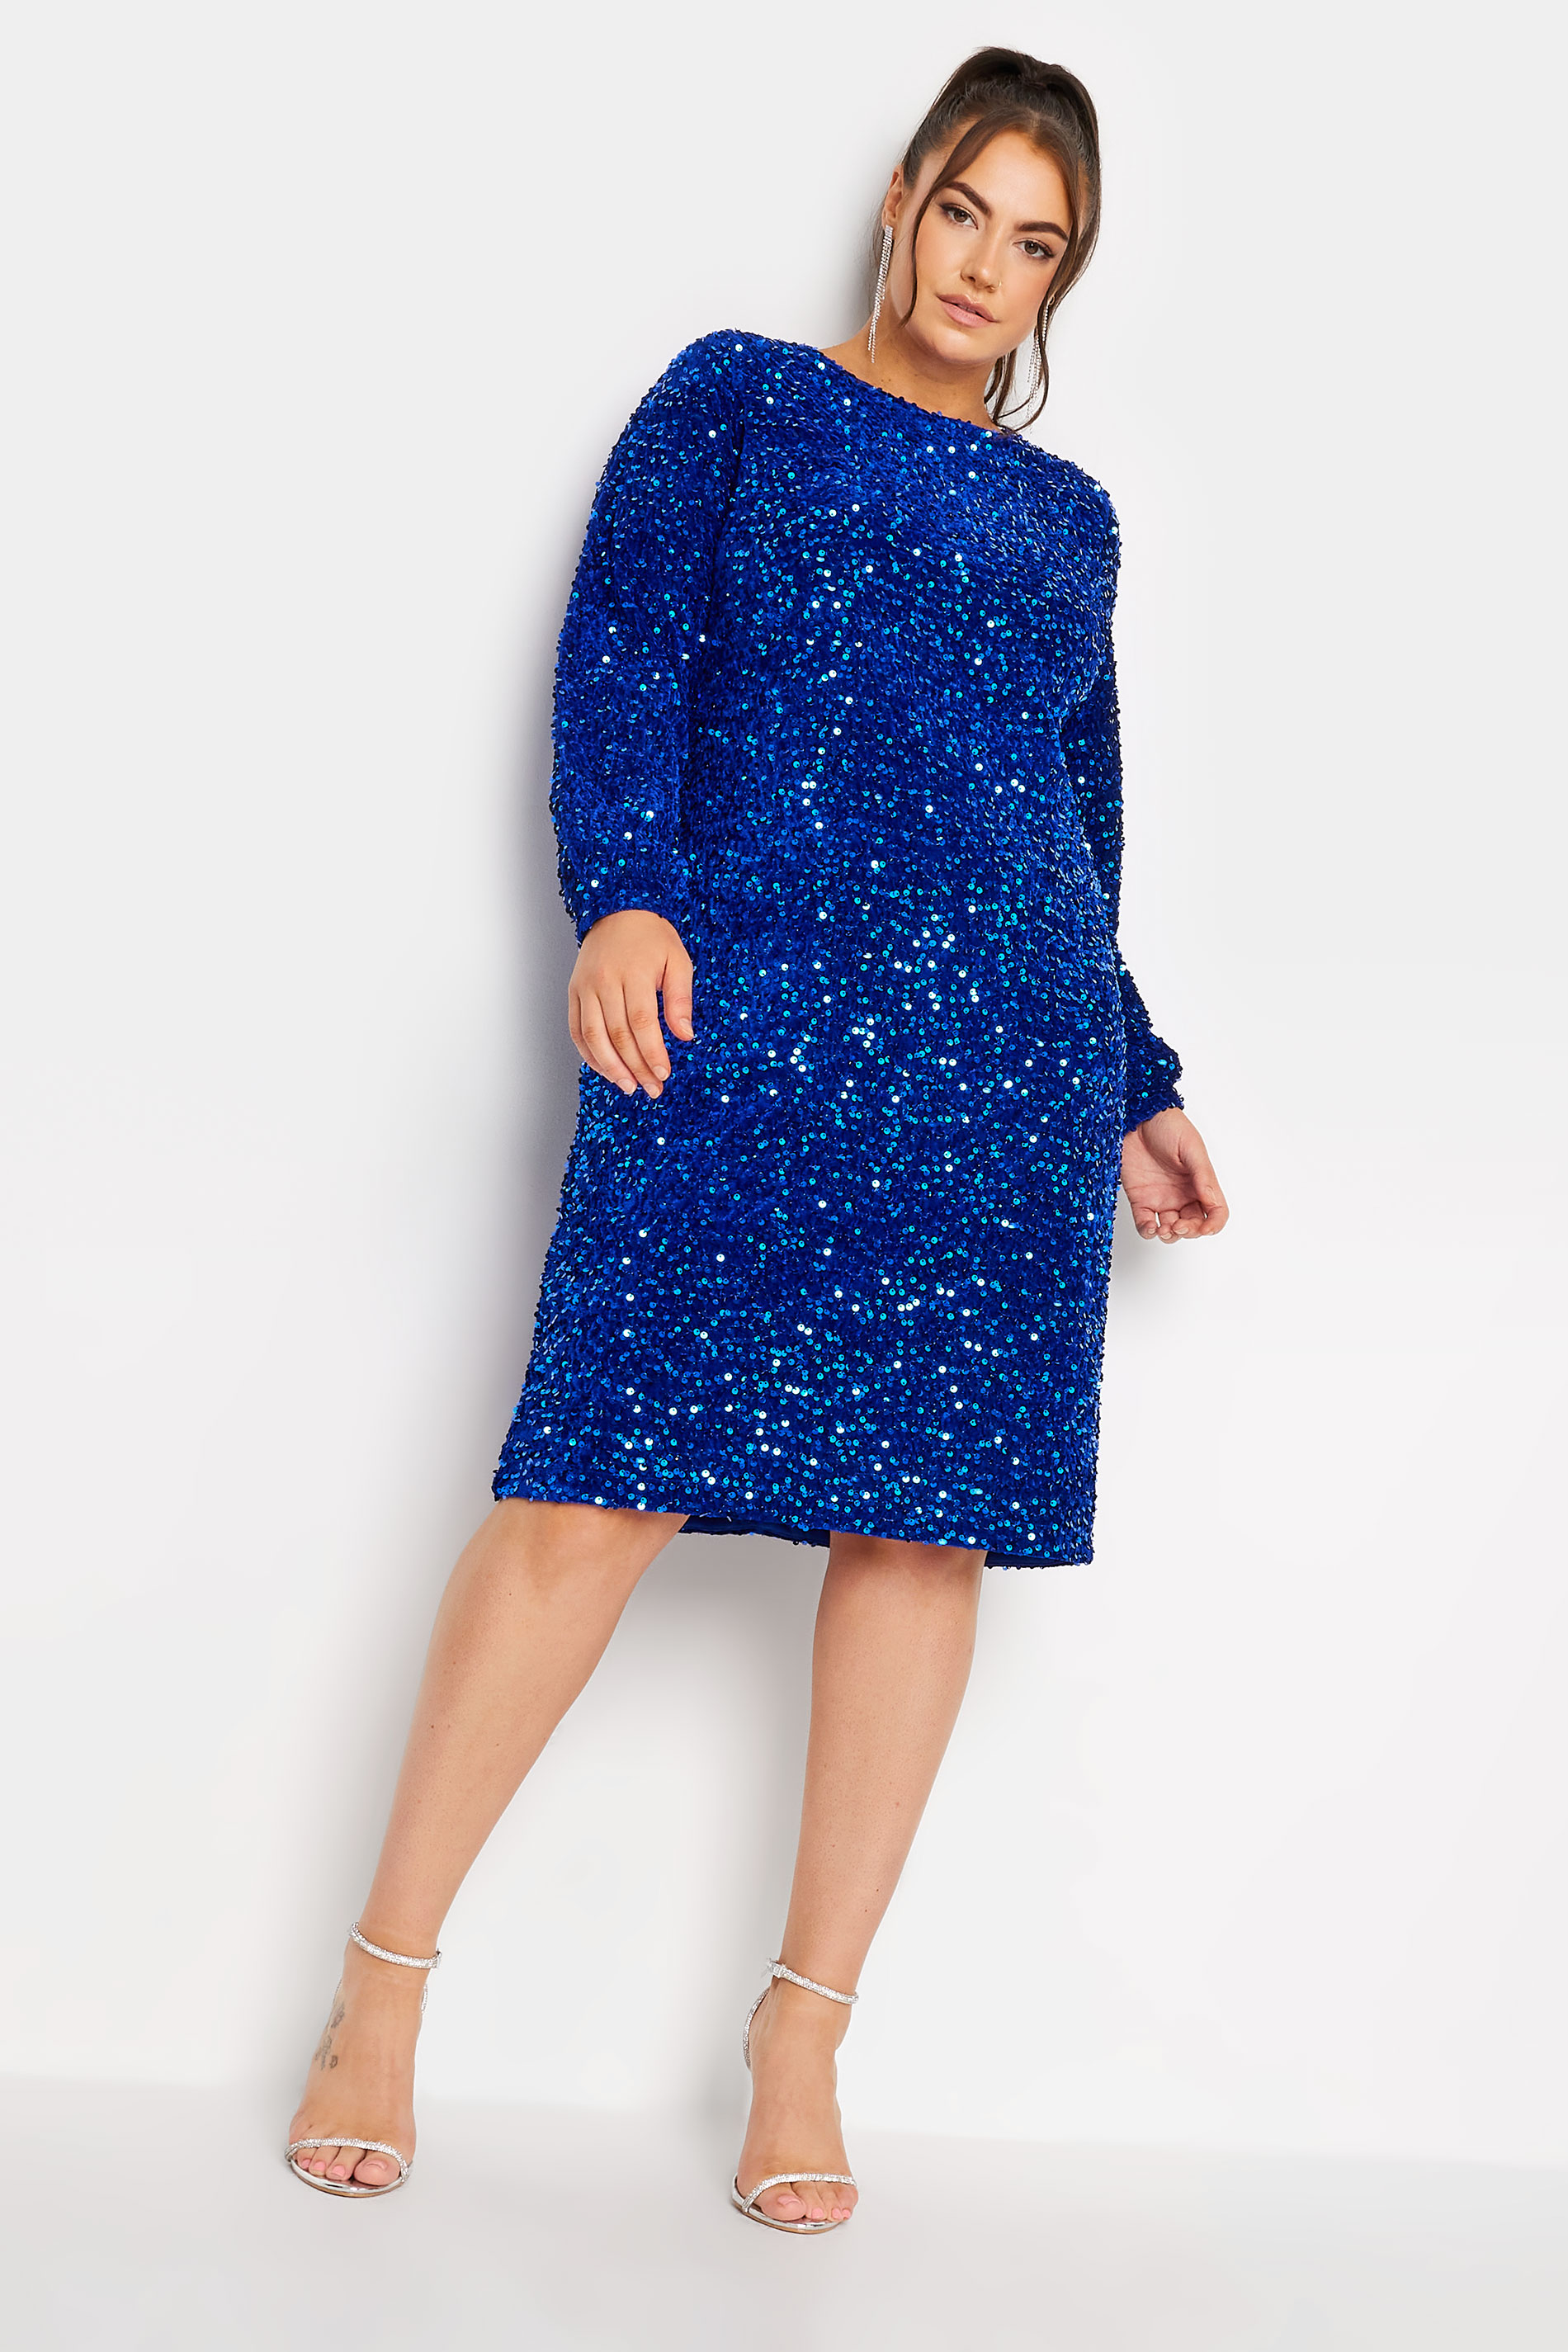 YOURS LONDON Plus Size Cobalt Blue Long Sleeve Sequin Shift Dress | Yours Clothing 1